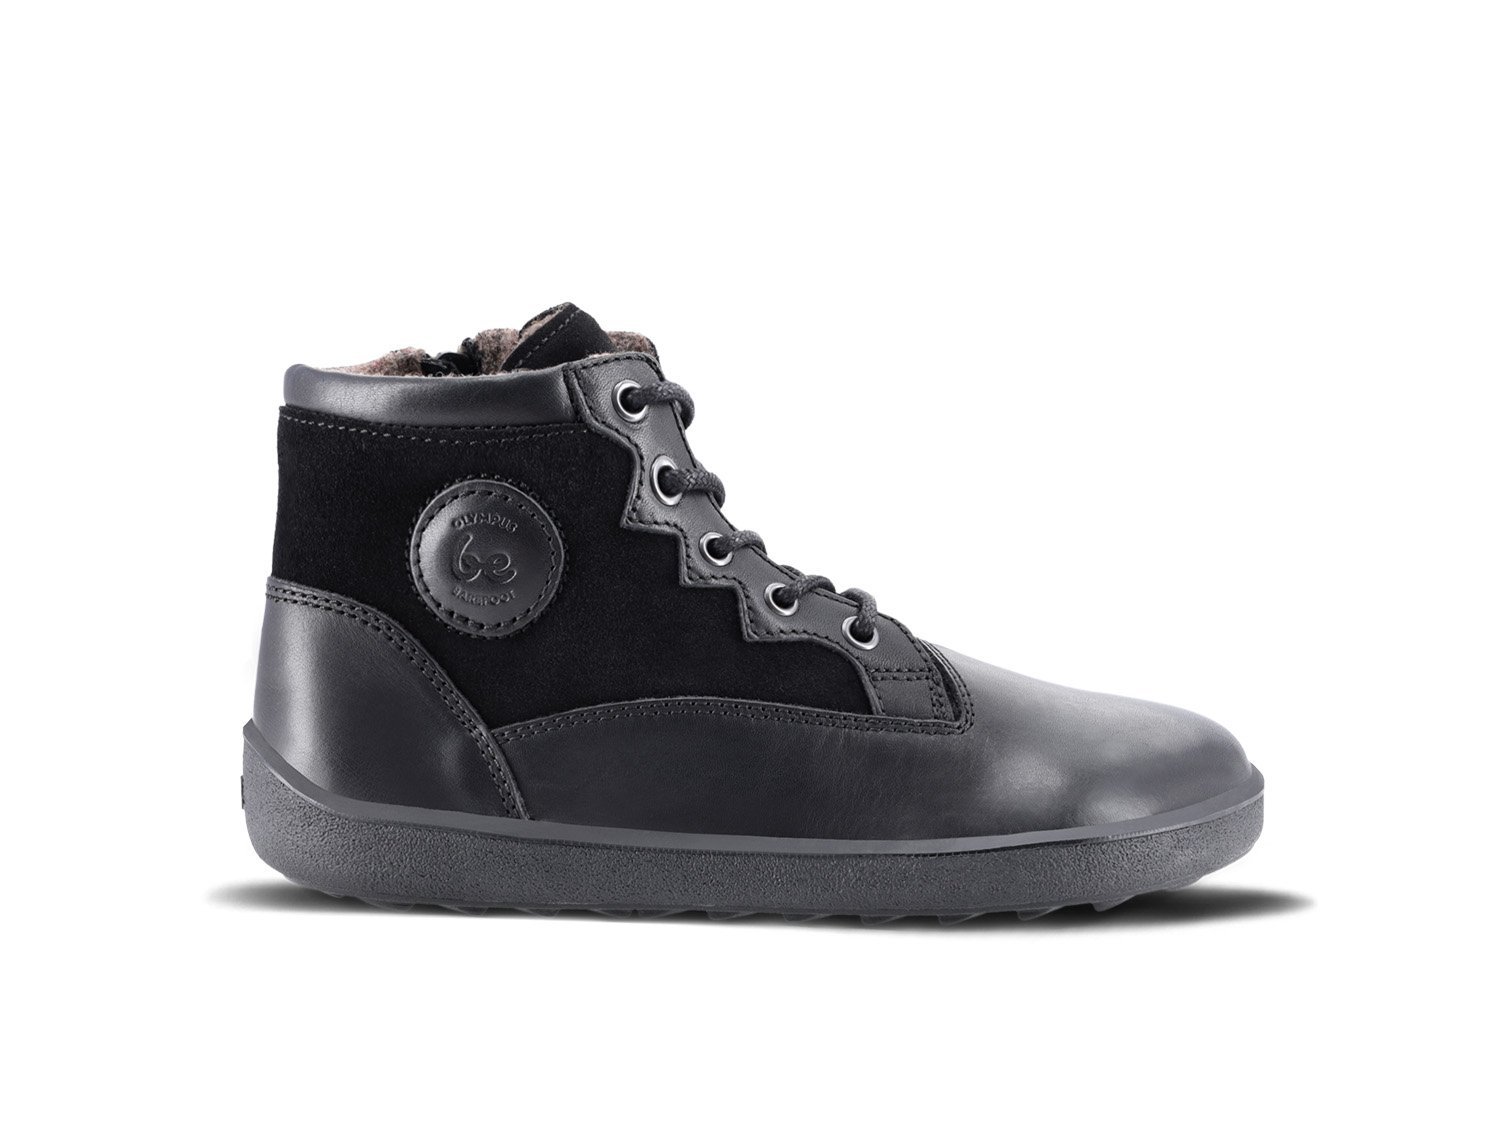 Zapatos Barefoot – Be Lenka – bliss – black